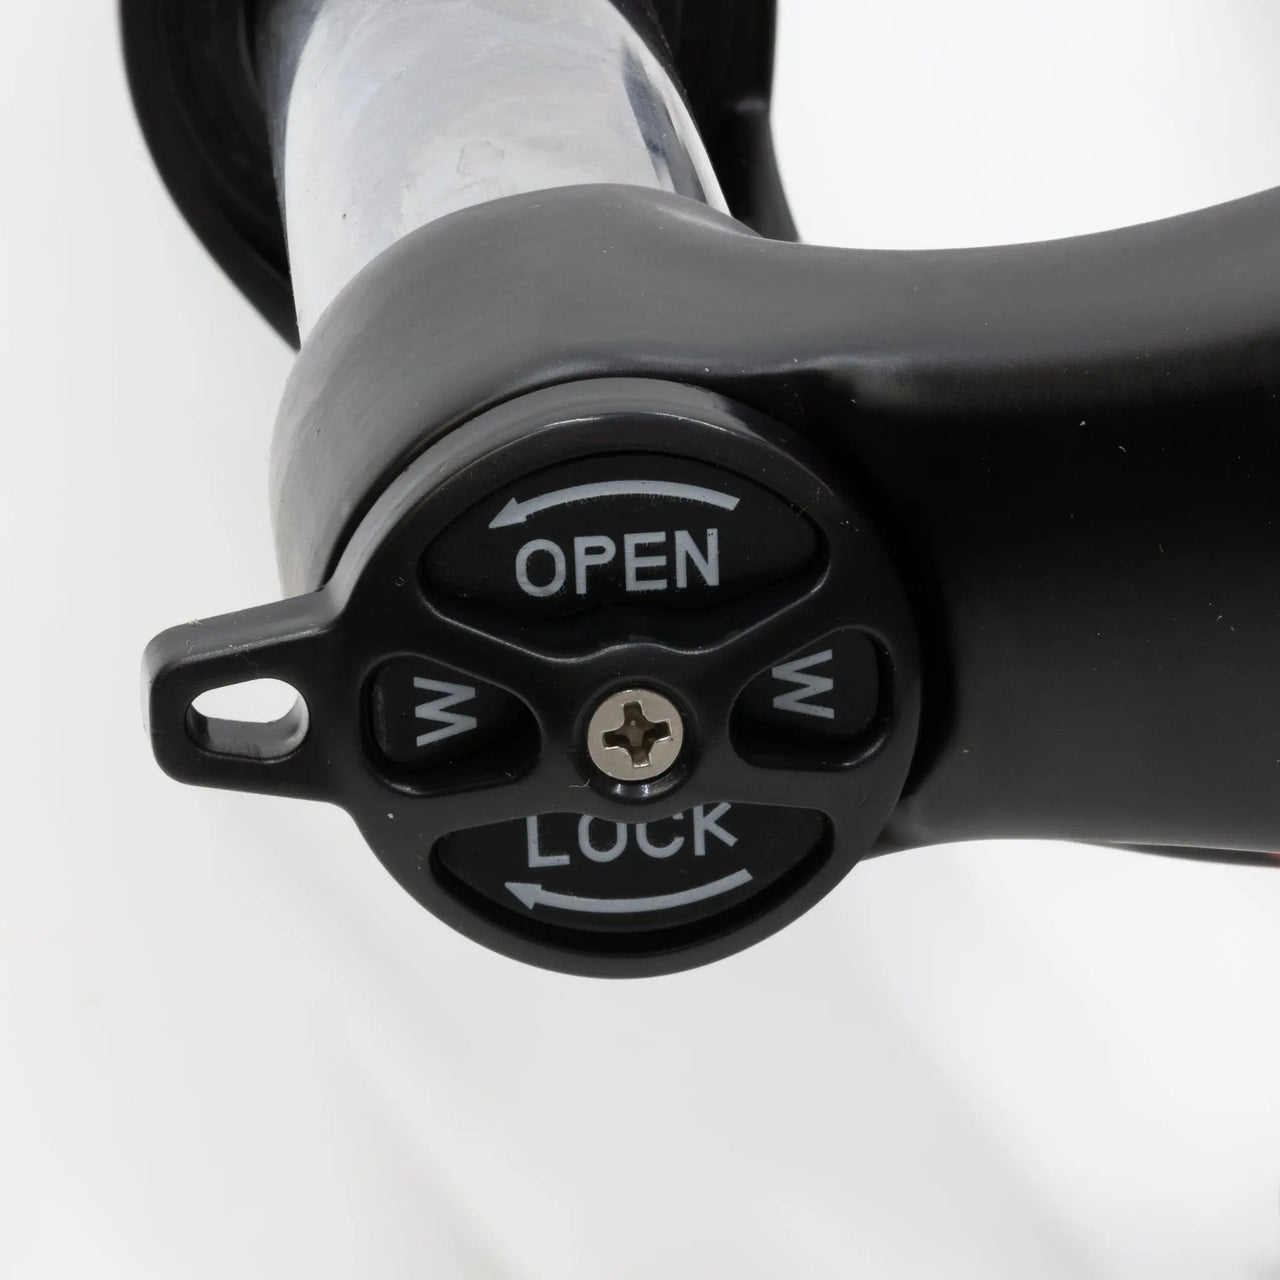 26 Suspension Fork Black 100mm Travel Air Bike Mountain Bike MTB 26 Lockout & Quick Release - Air BikeSuspension Fork